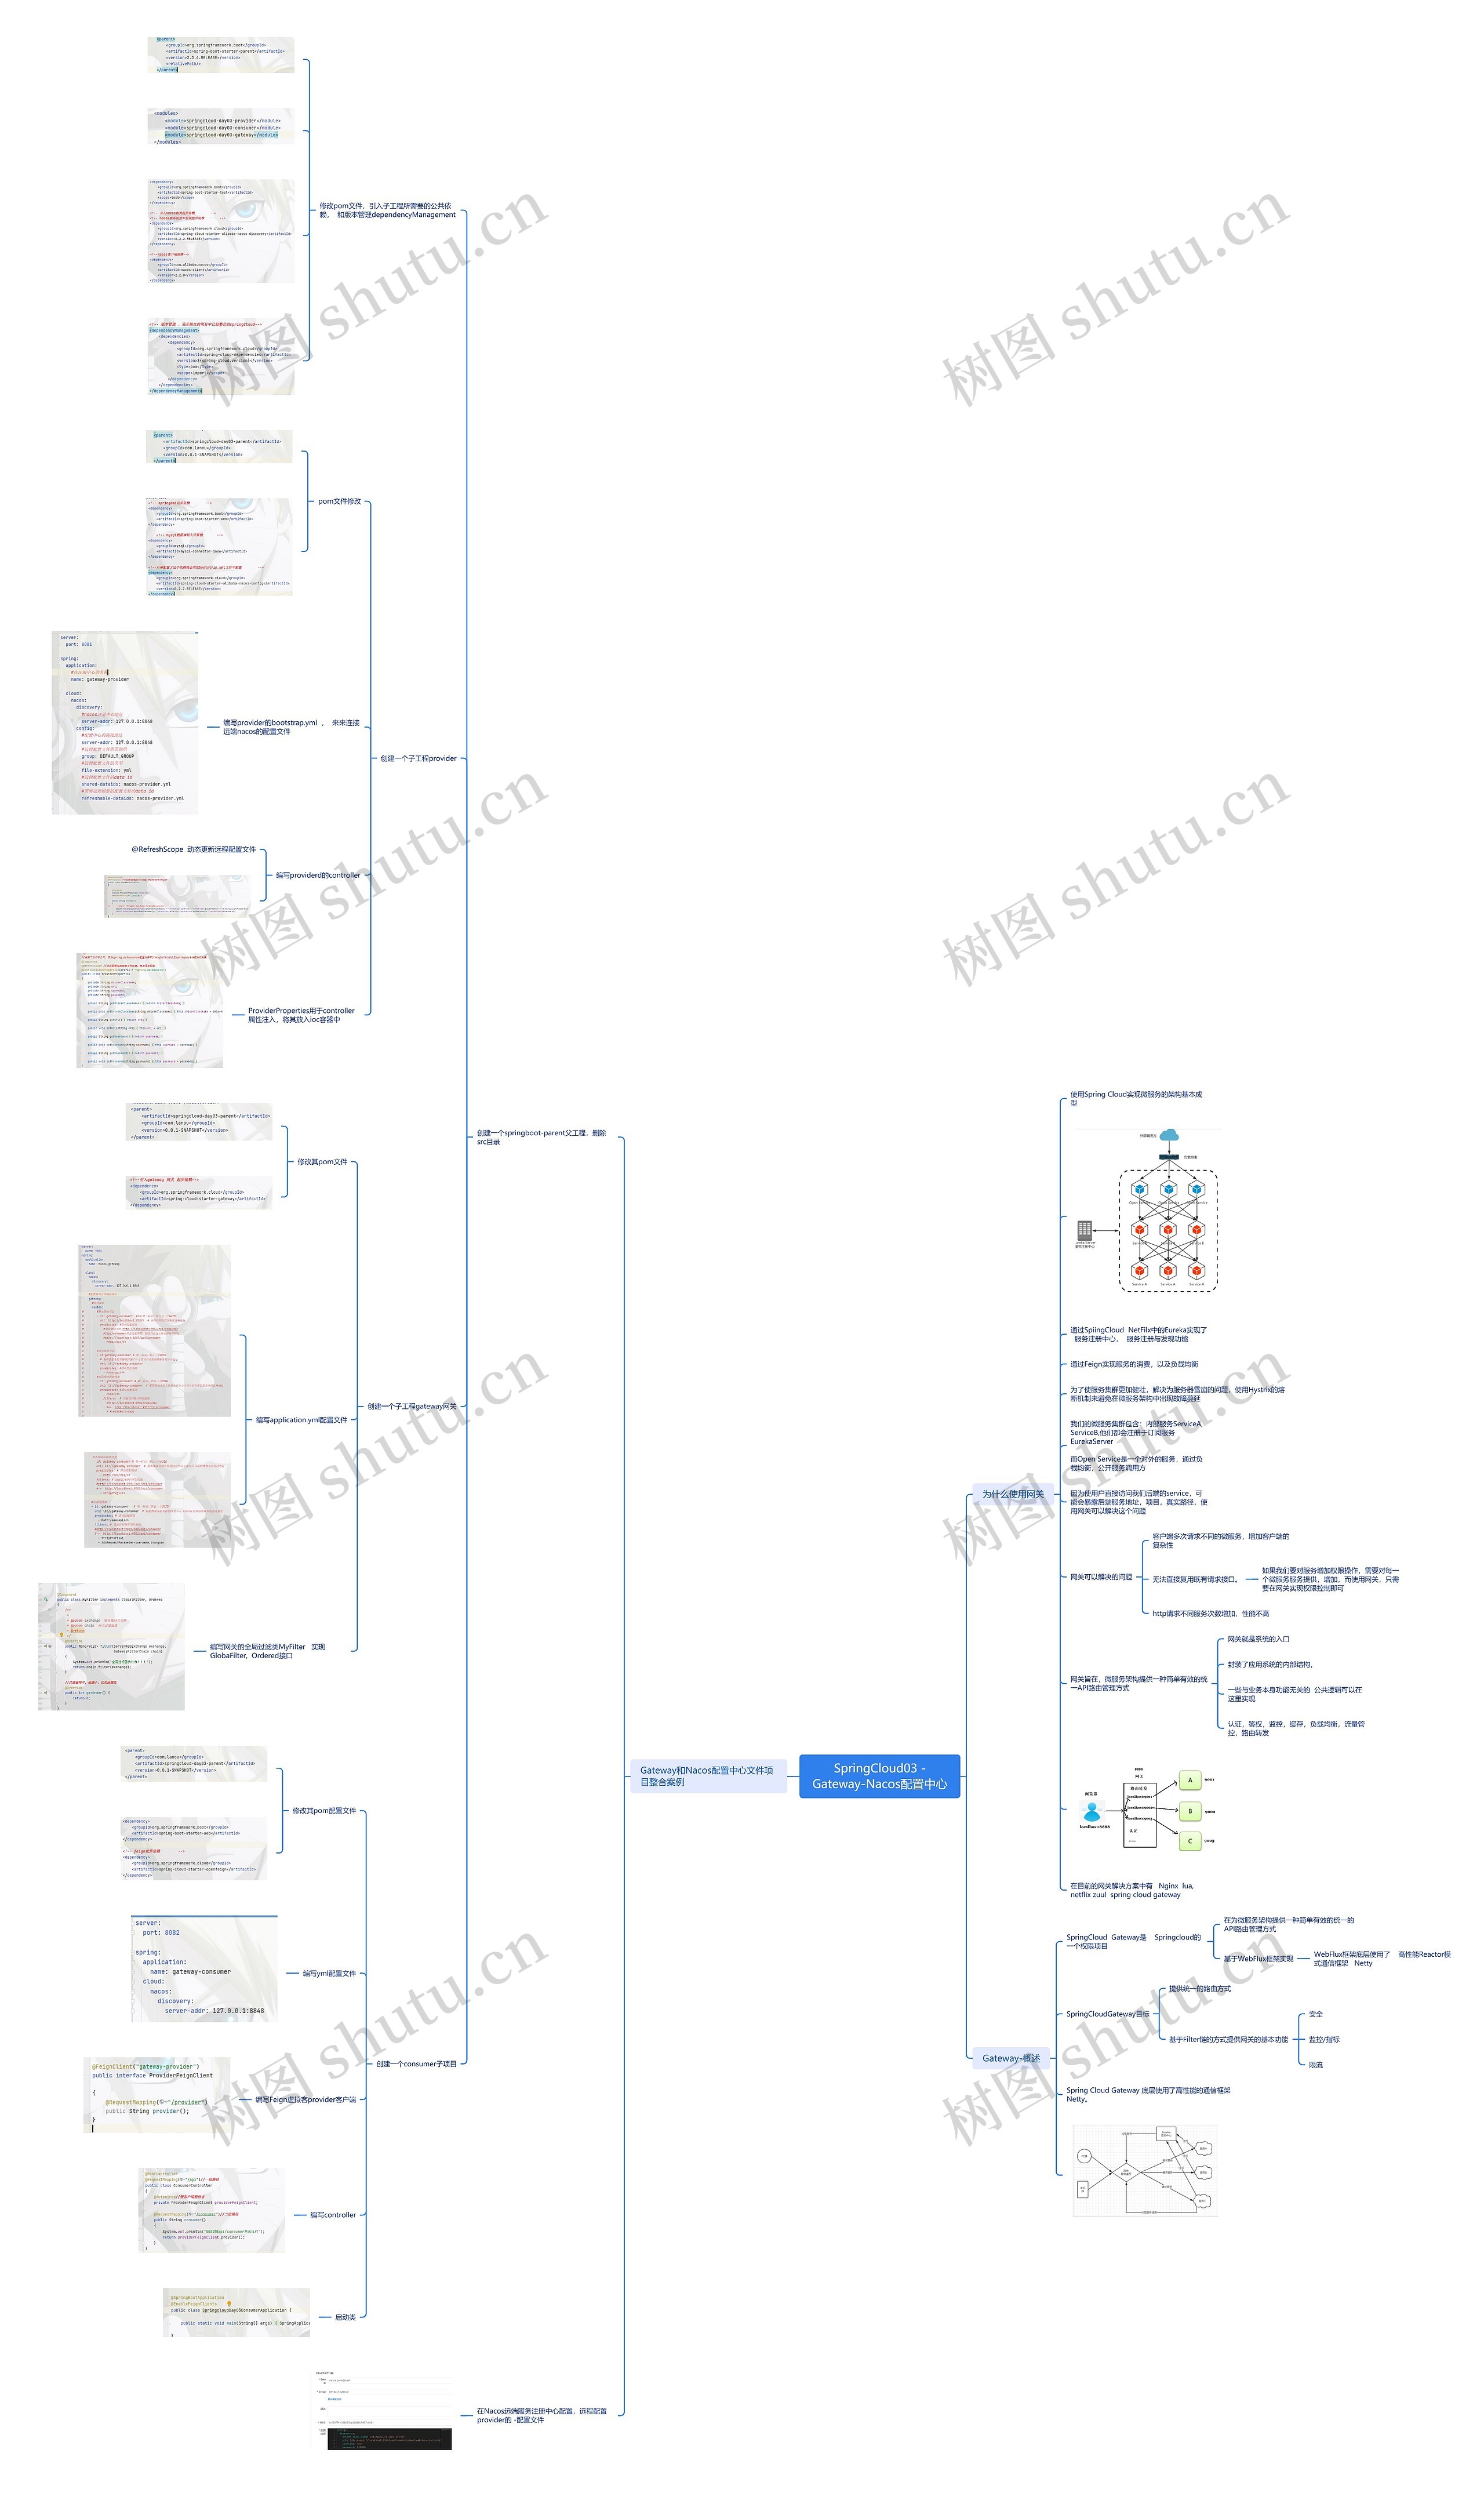 SpringCloud配置中心脑图